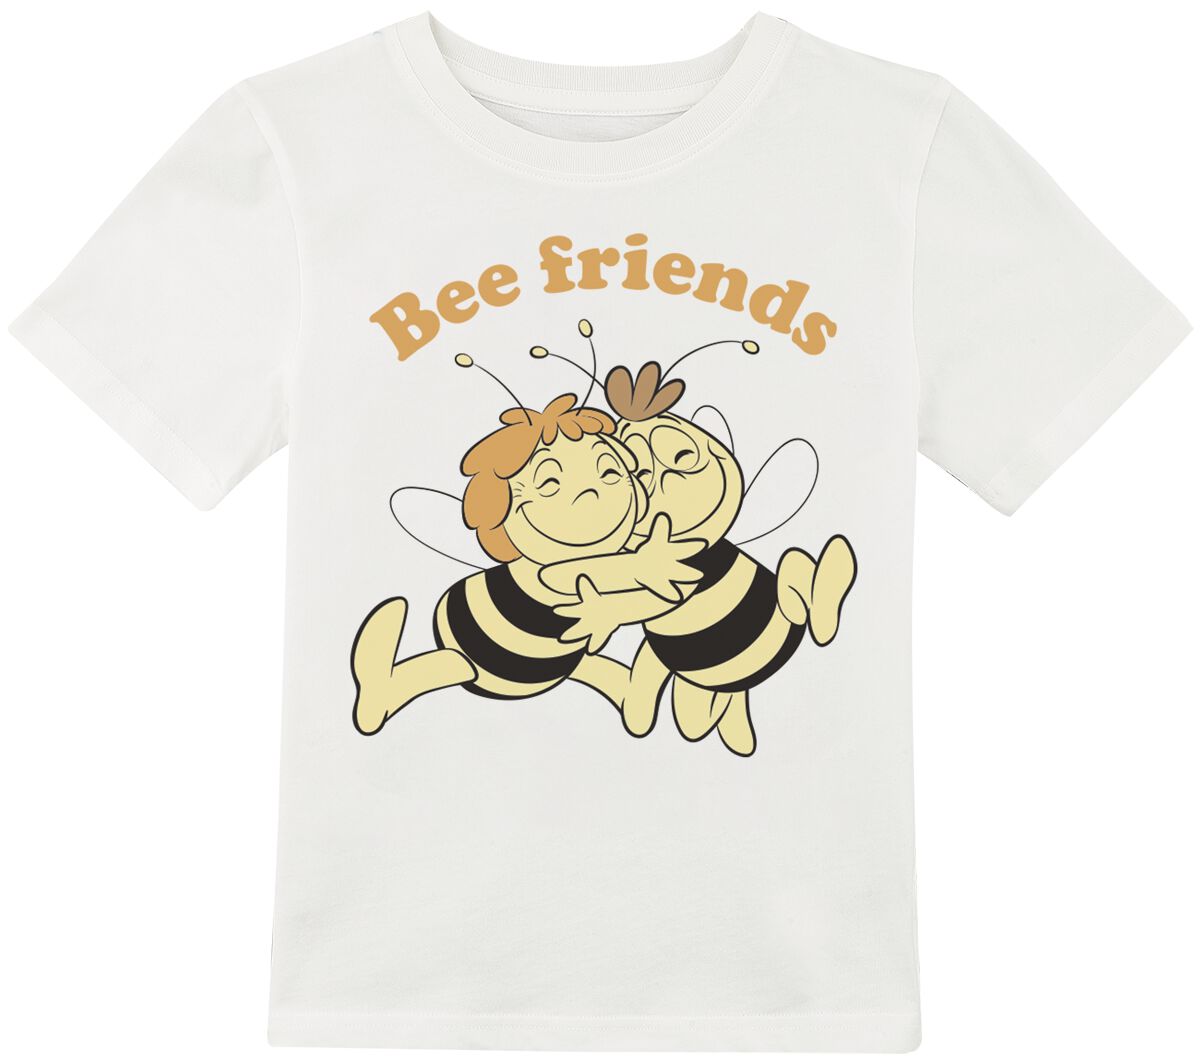 die biene maja t-shirt - kids - bee friends - 116 bis 164 - fÃ¼r mÃ¤dchen - grÃ¶ÃŸe 164 - - emp exklusives merchandise! altweiÃŸ donna